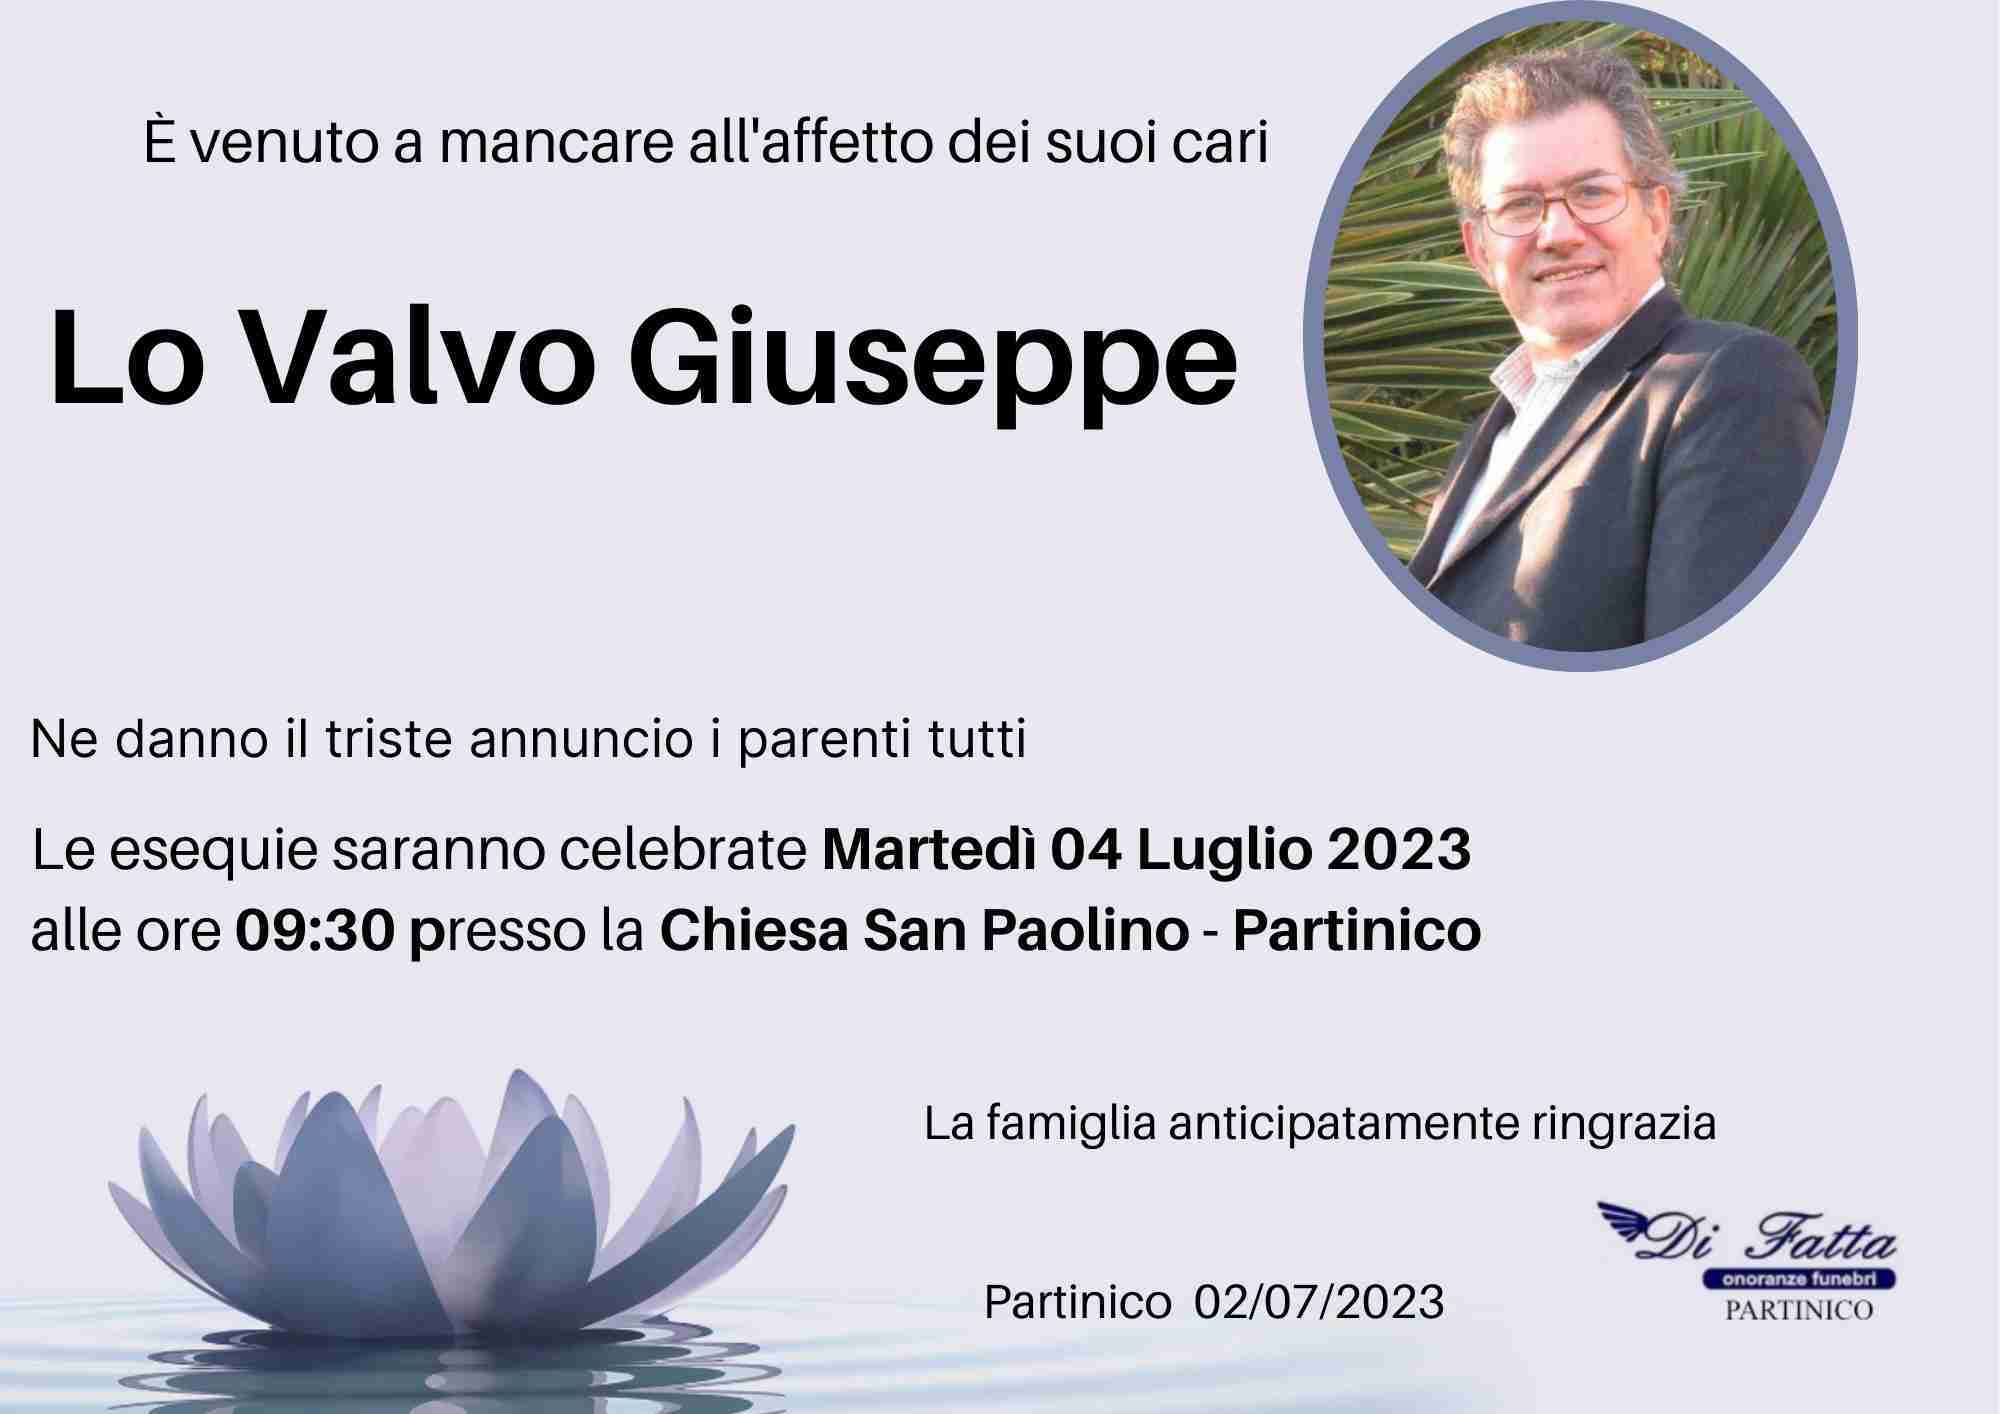 Giuseppe Lo Valvo